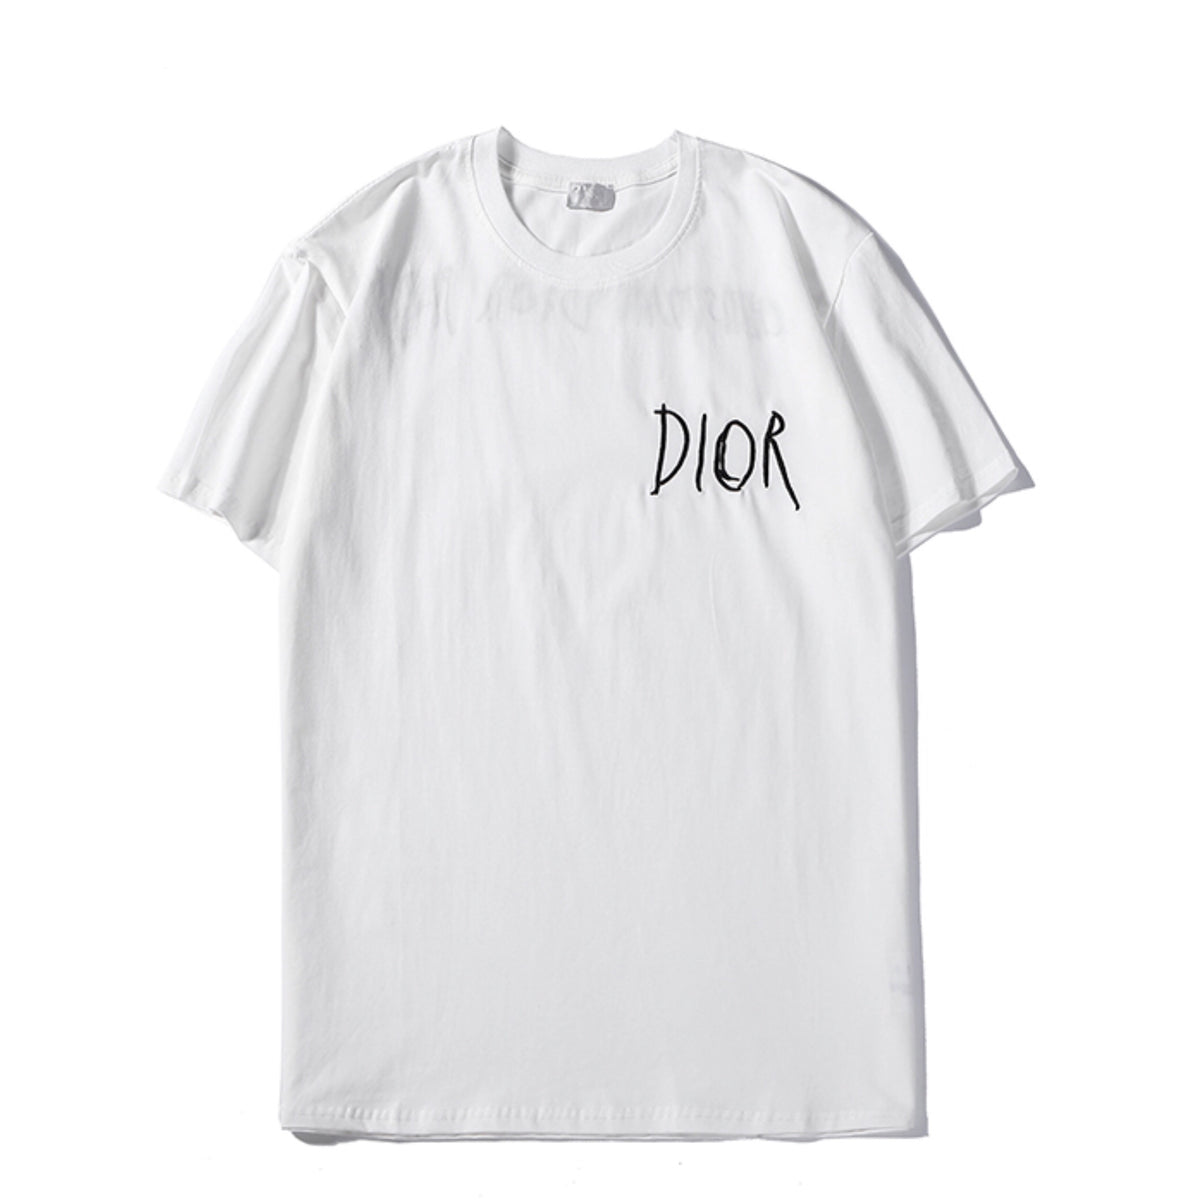 dior shirt price